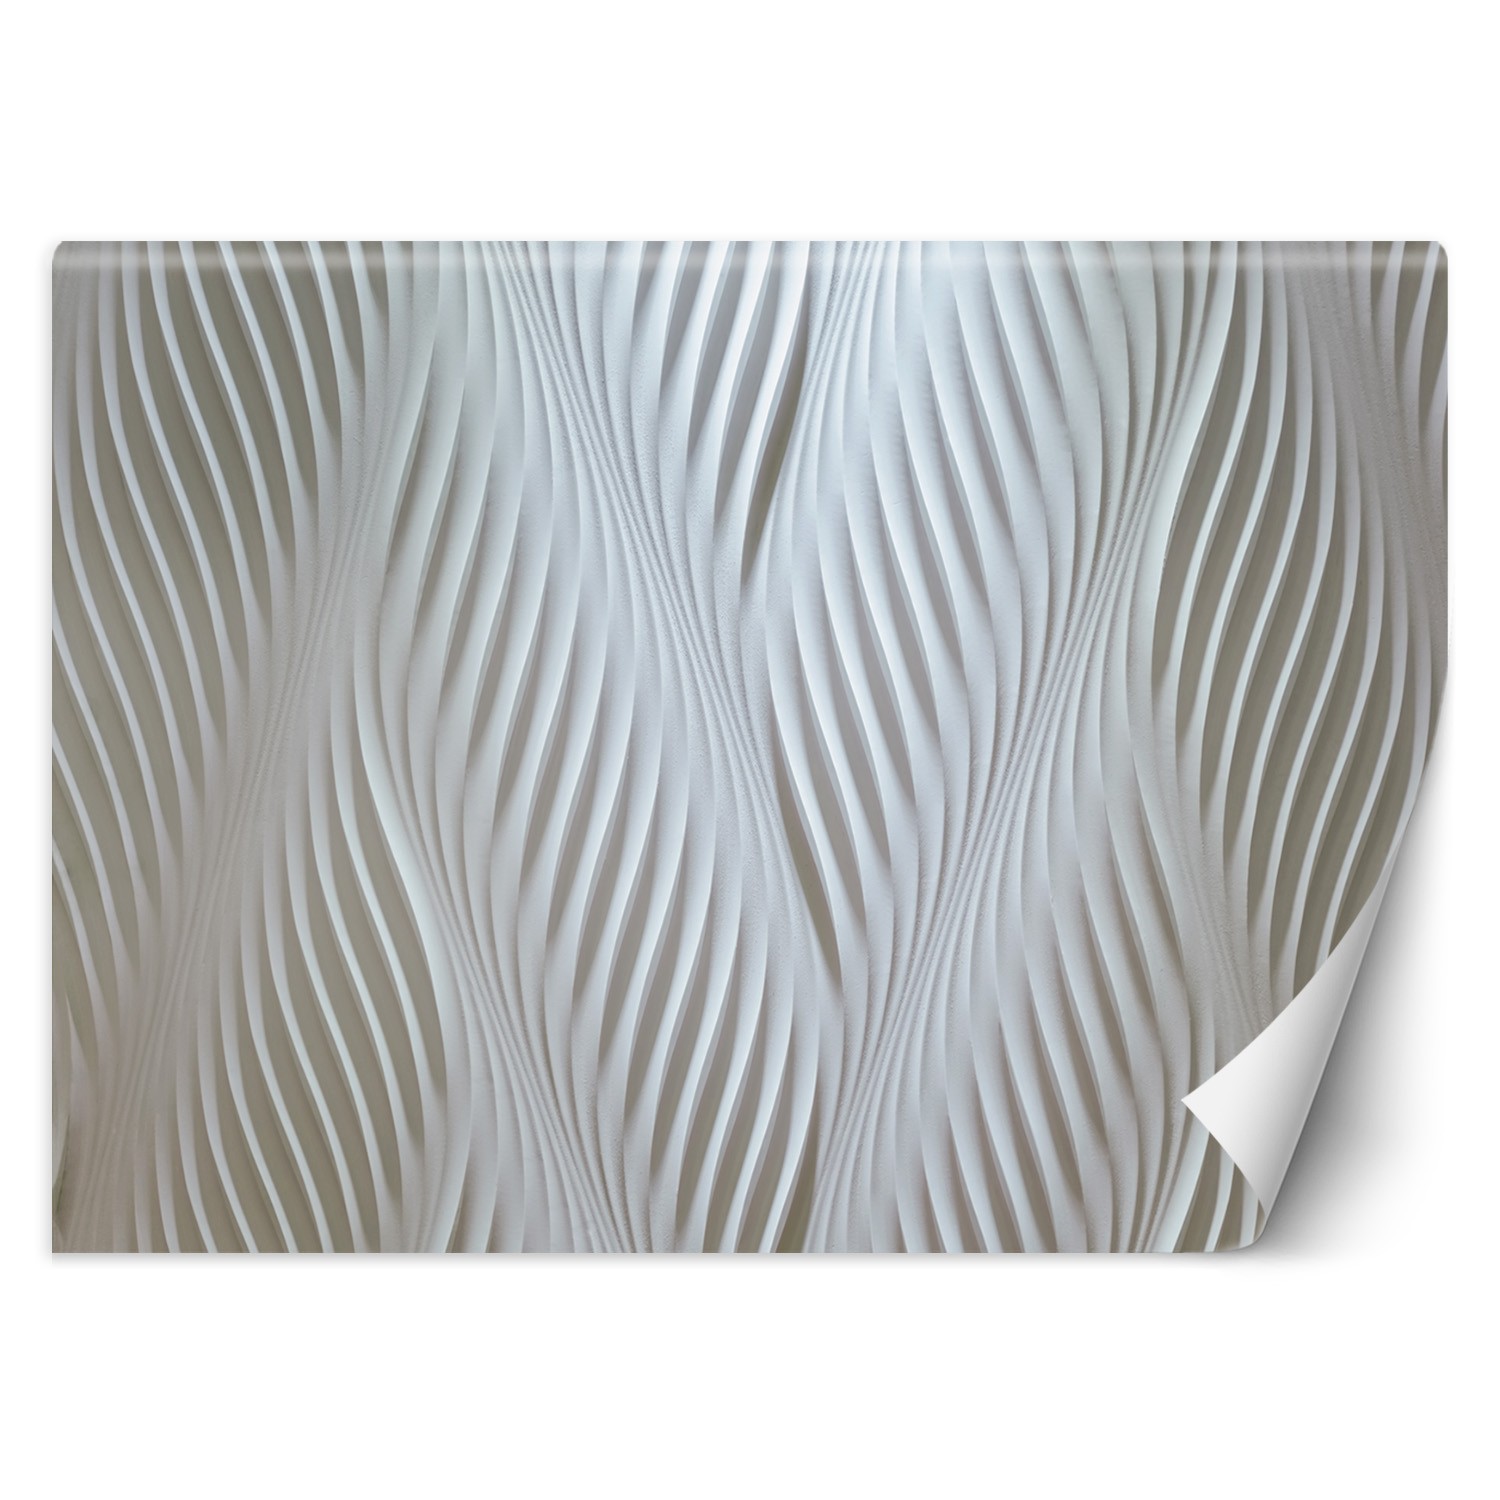 Trend24 – Behang – Golven In Abstract – Vliesbehang – Fotobehang 3D – Behang Woonkamer – 450x315x2 cm – Incl. behanglijm